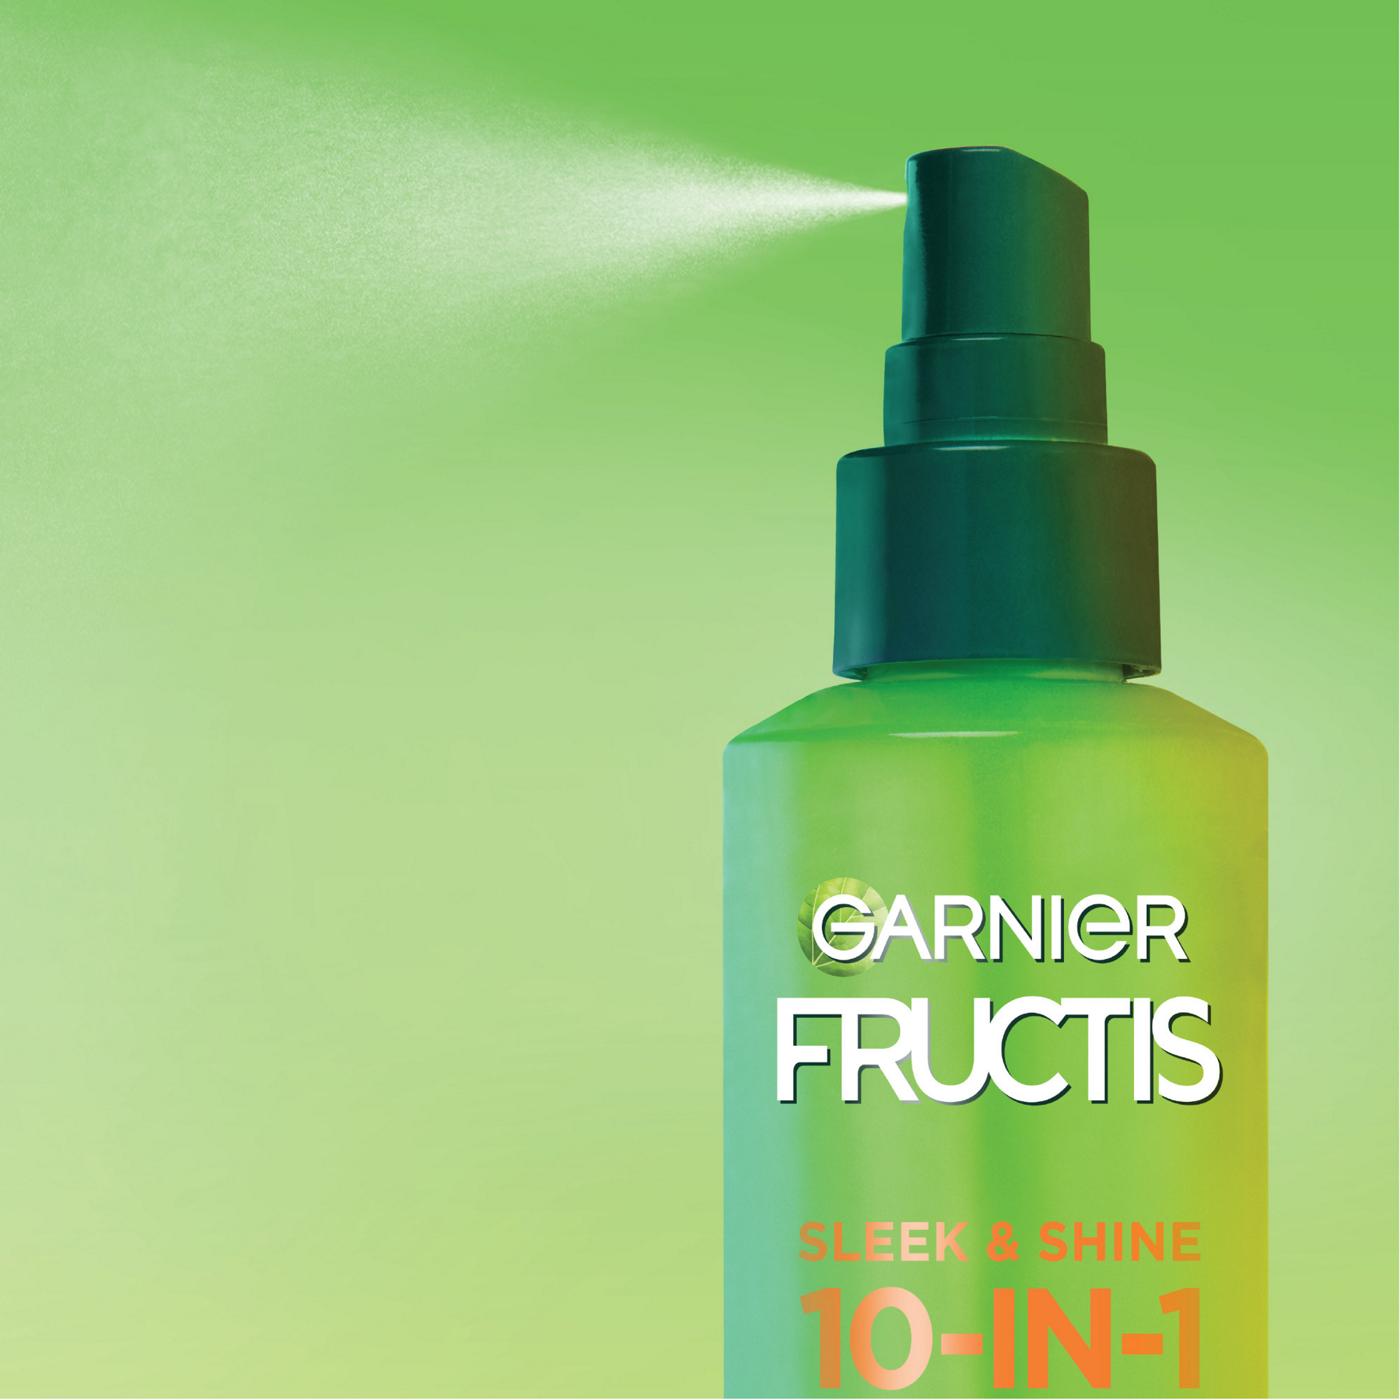 Garnier Fructis Sleek & Shine 10-in-1 Leave-In Spray; image 7 of 9